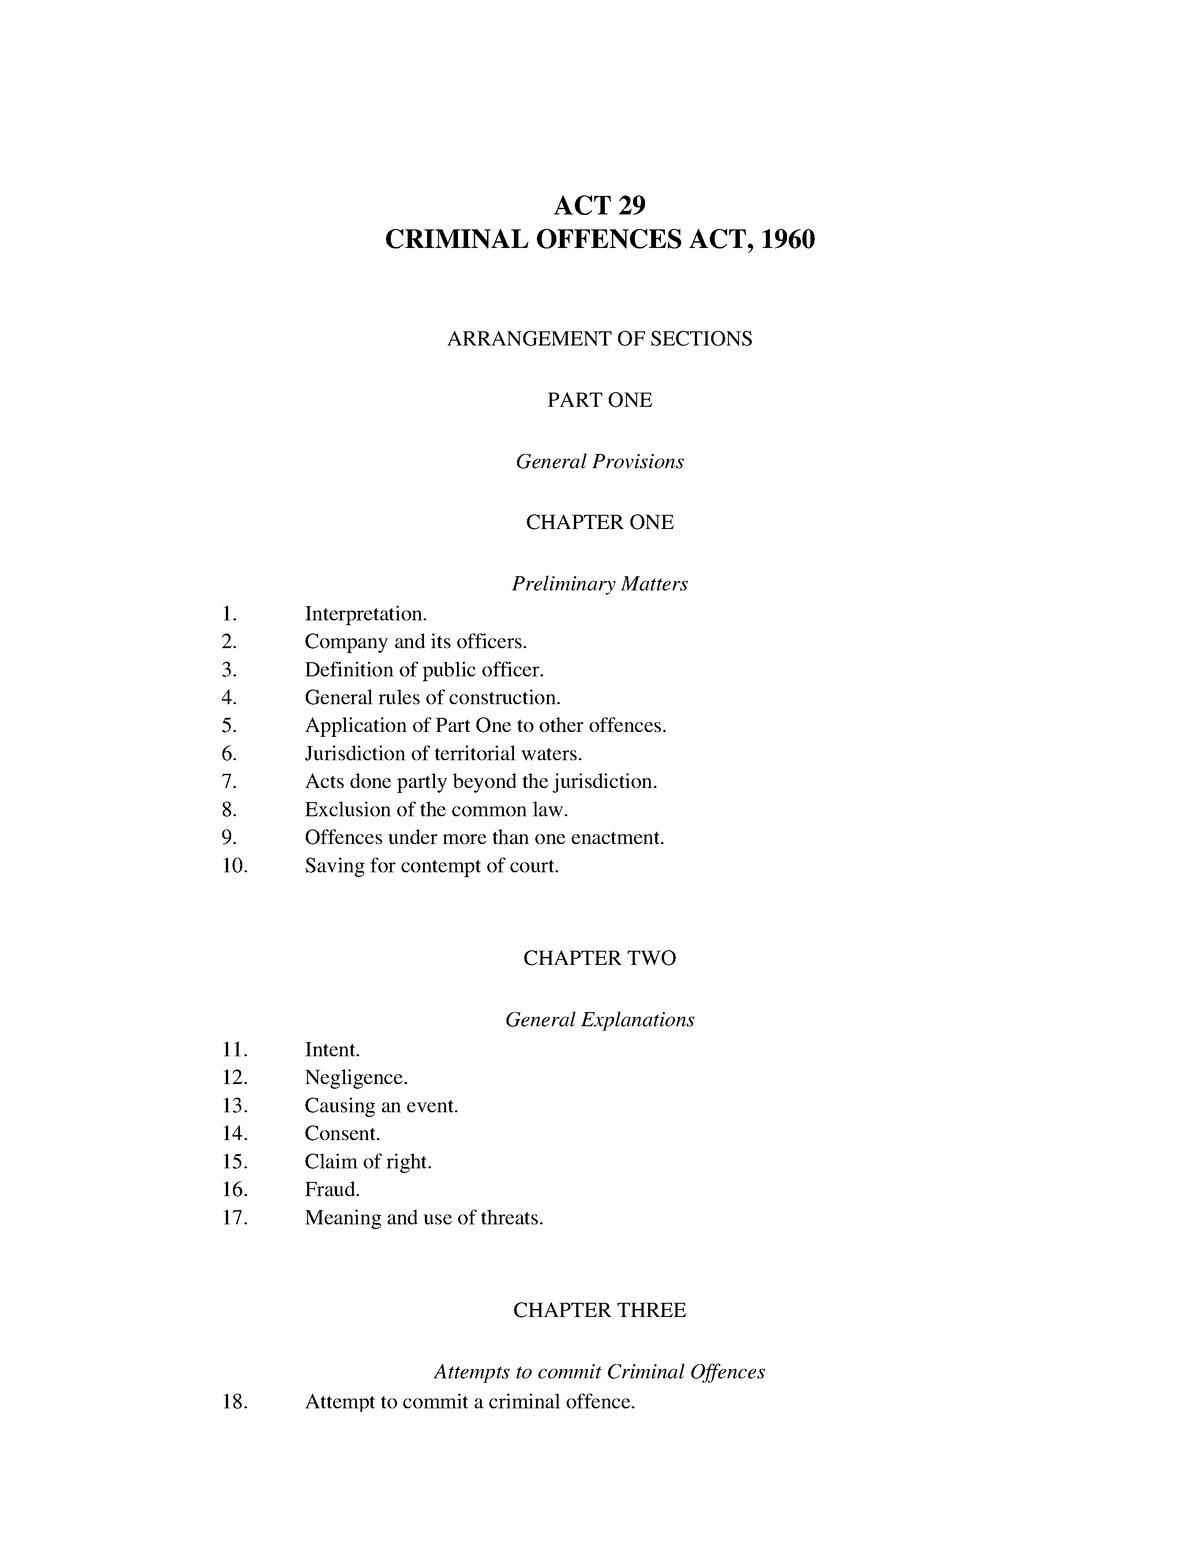 Criminal Offences Act 1960 Act 29 Criminal Offences Act 1960 Arrangement Of Sections Part One